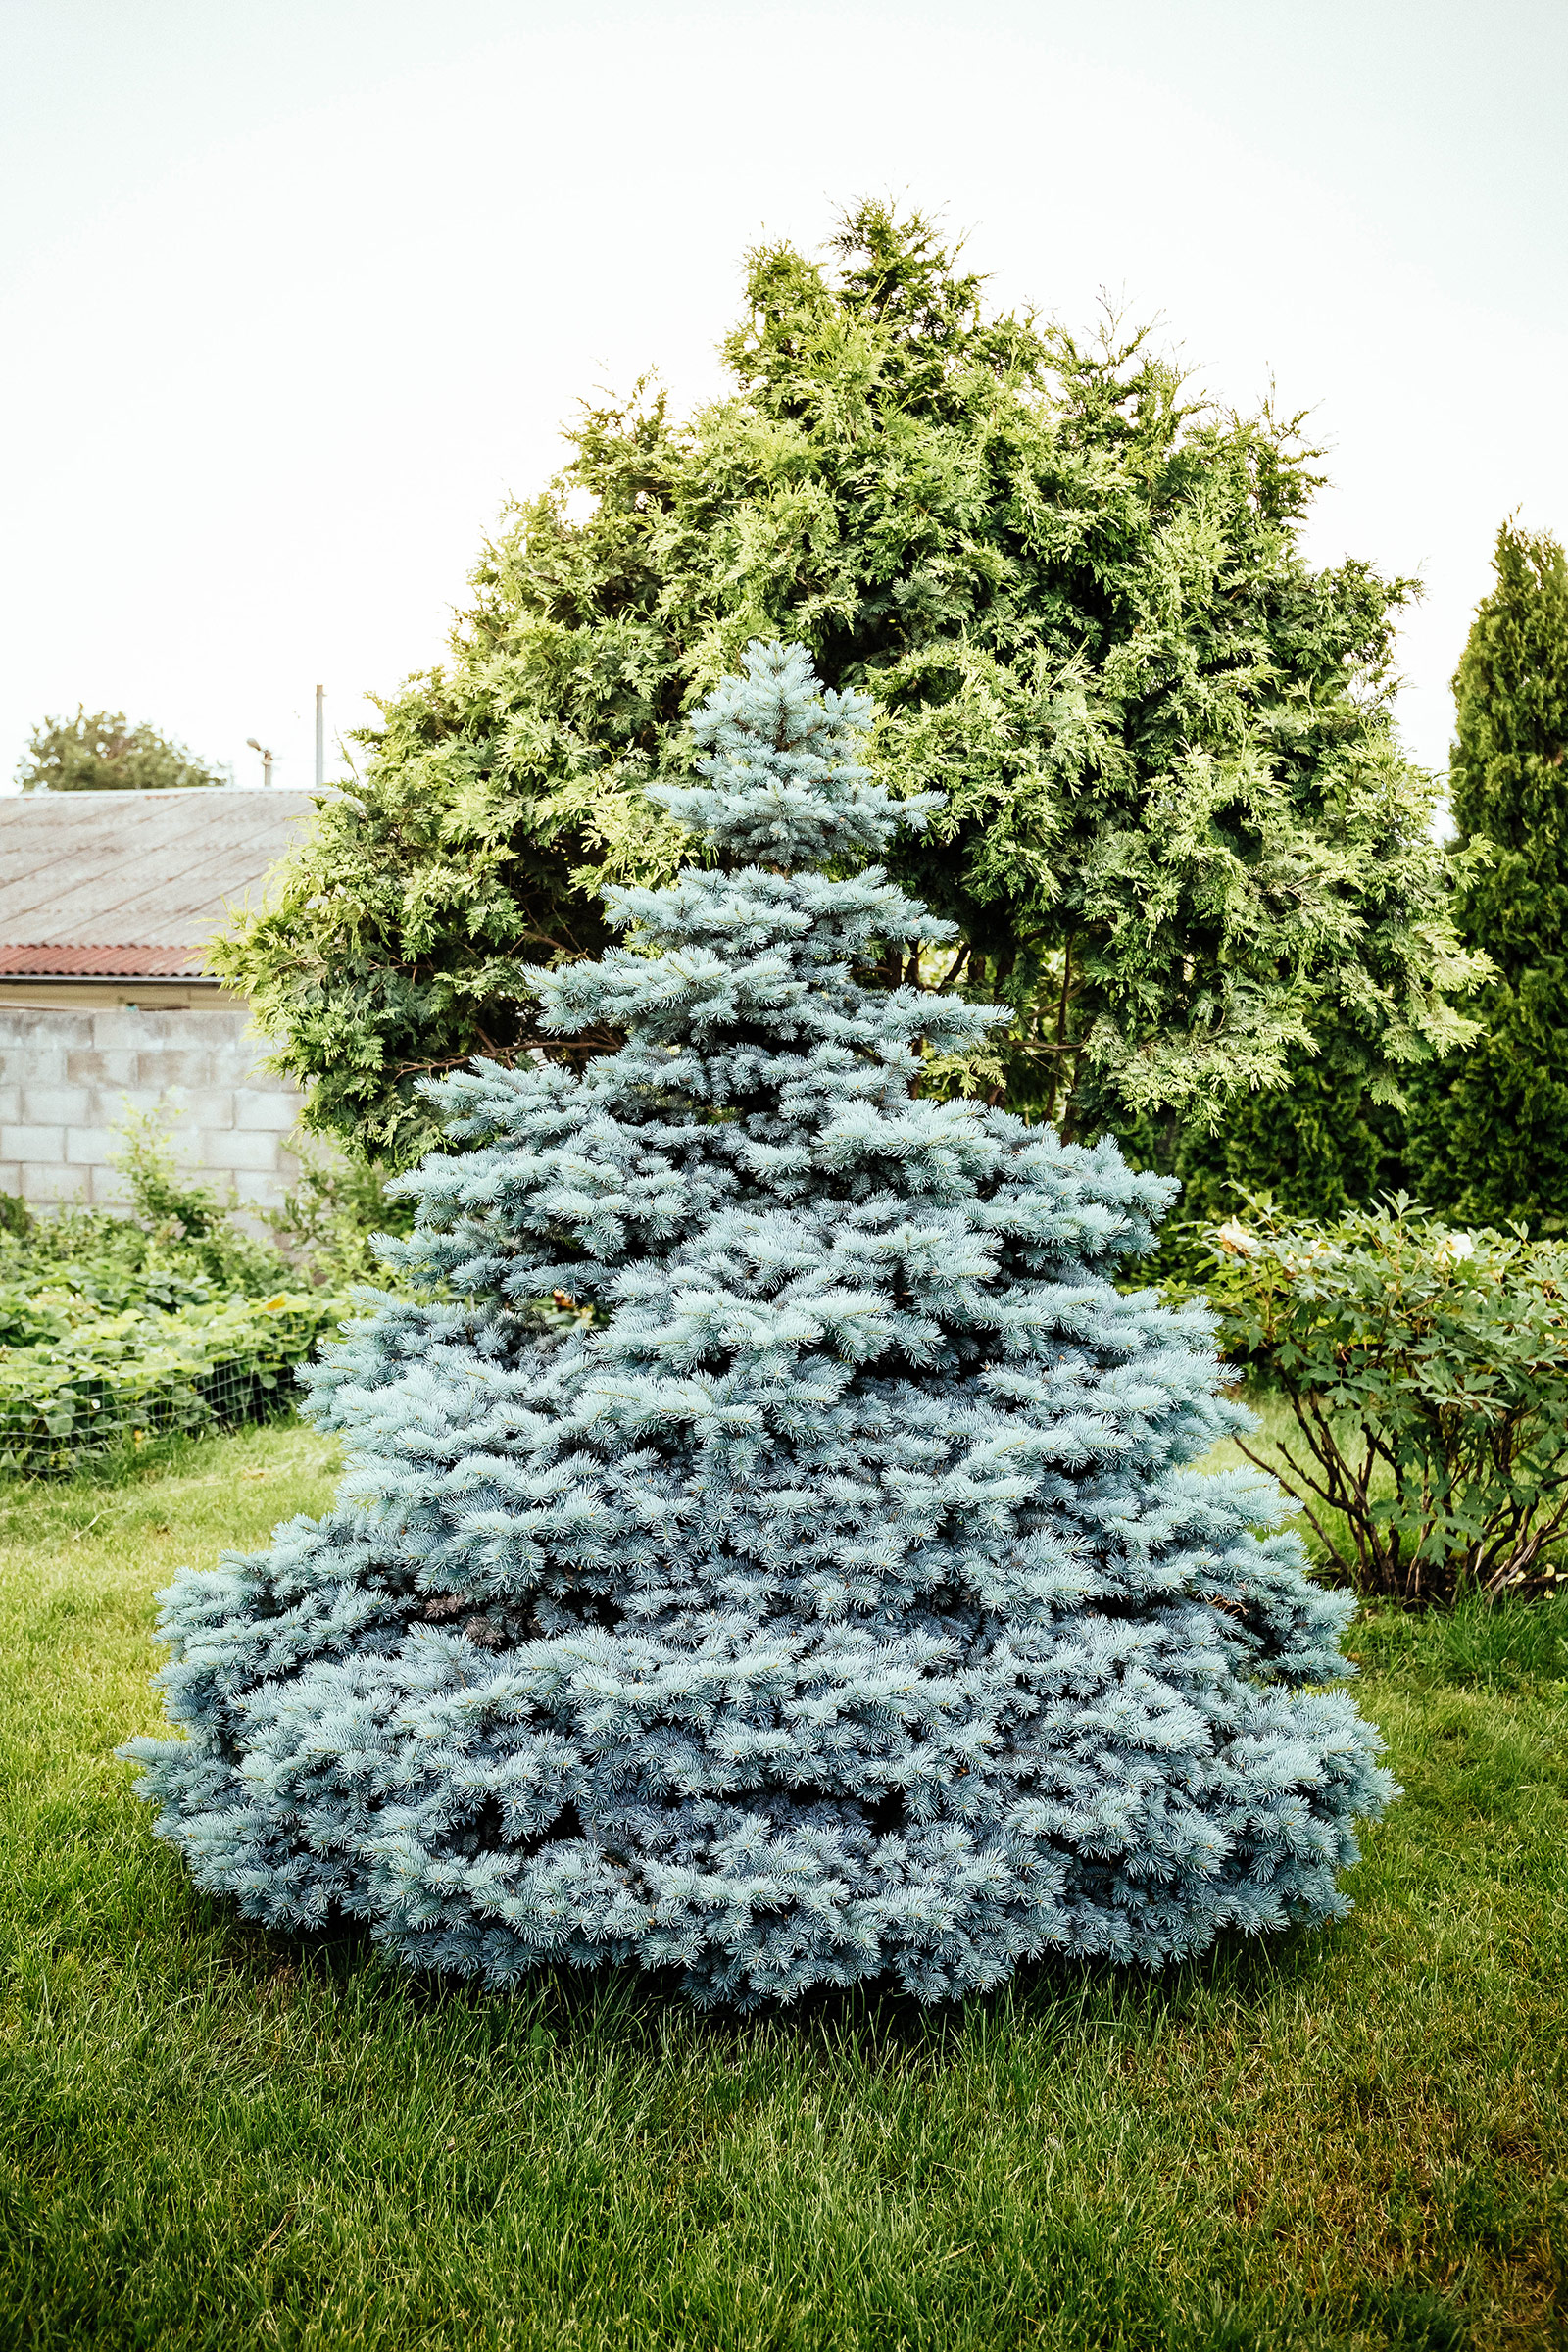 Fast-growing Colorado blue spruce tree in a grassy backyard